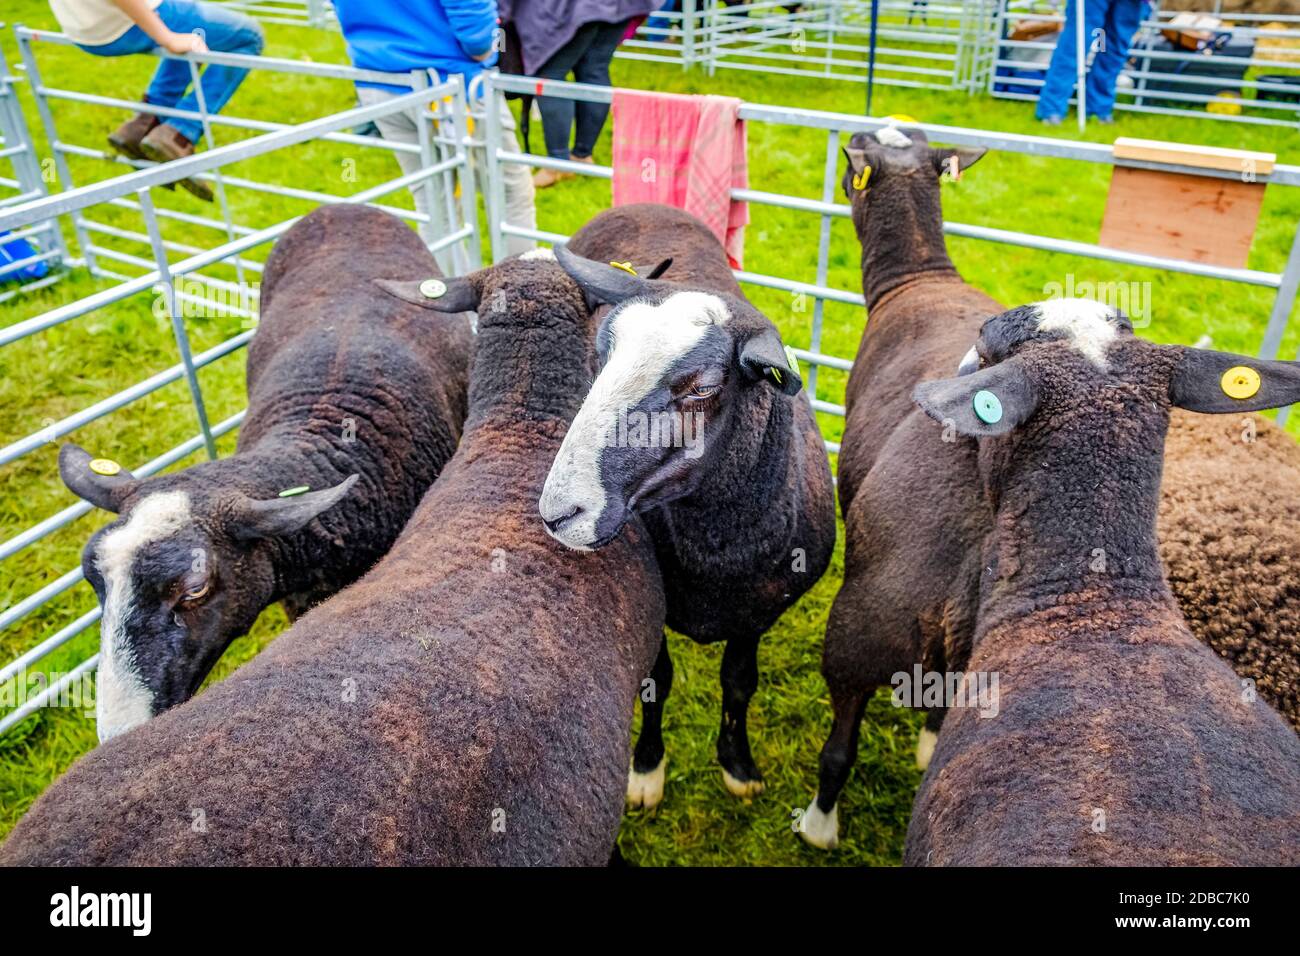 England Cartmel 3. August 2016 Black Welsh Mountain Sheep in Ein Show Pen bei Cartmel Show Stockfoto